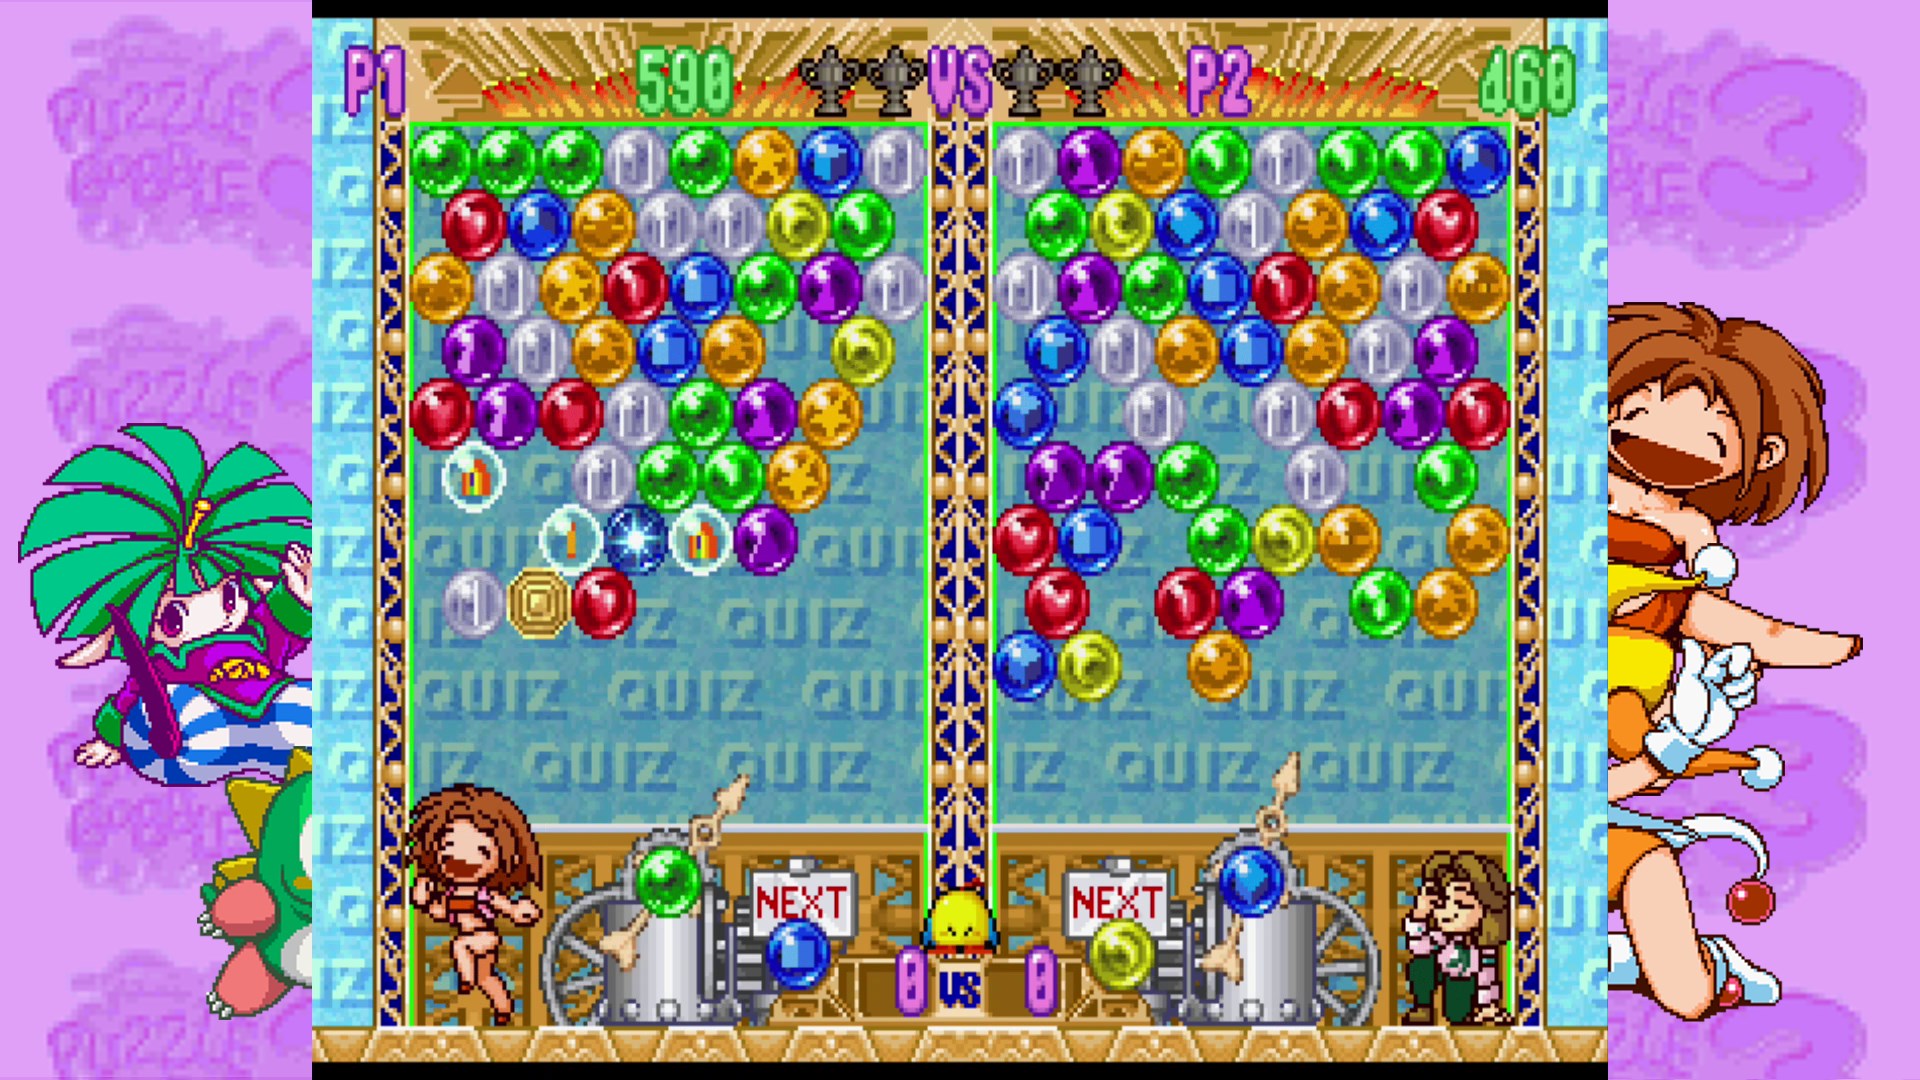 Puzzle Bobble 2X/BUST-A-MOVE 2 Arcade Edition & Puzzle Bobble 3/BUST-A-MOVE 3 S-Tribute screenshot 52229